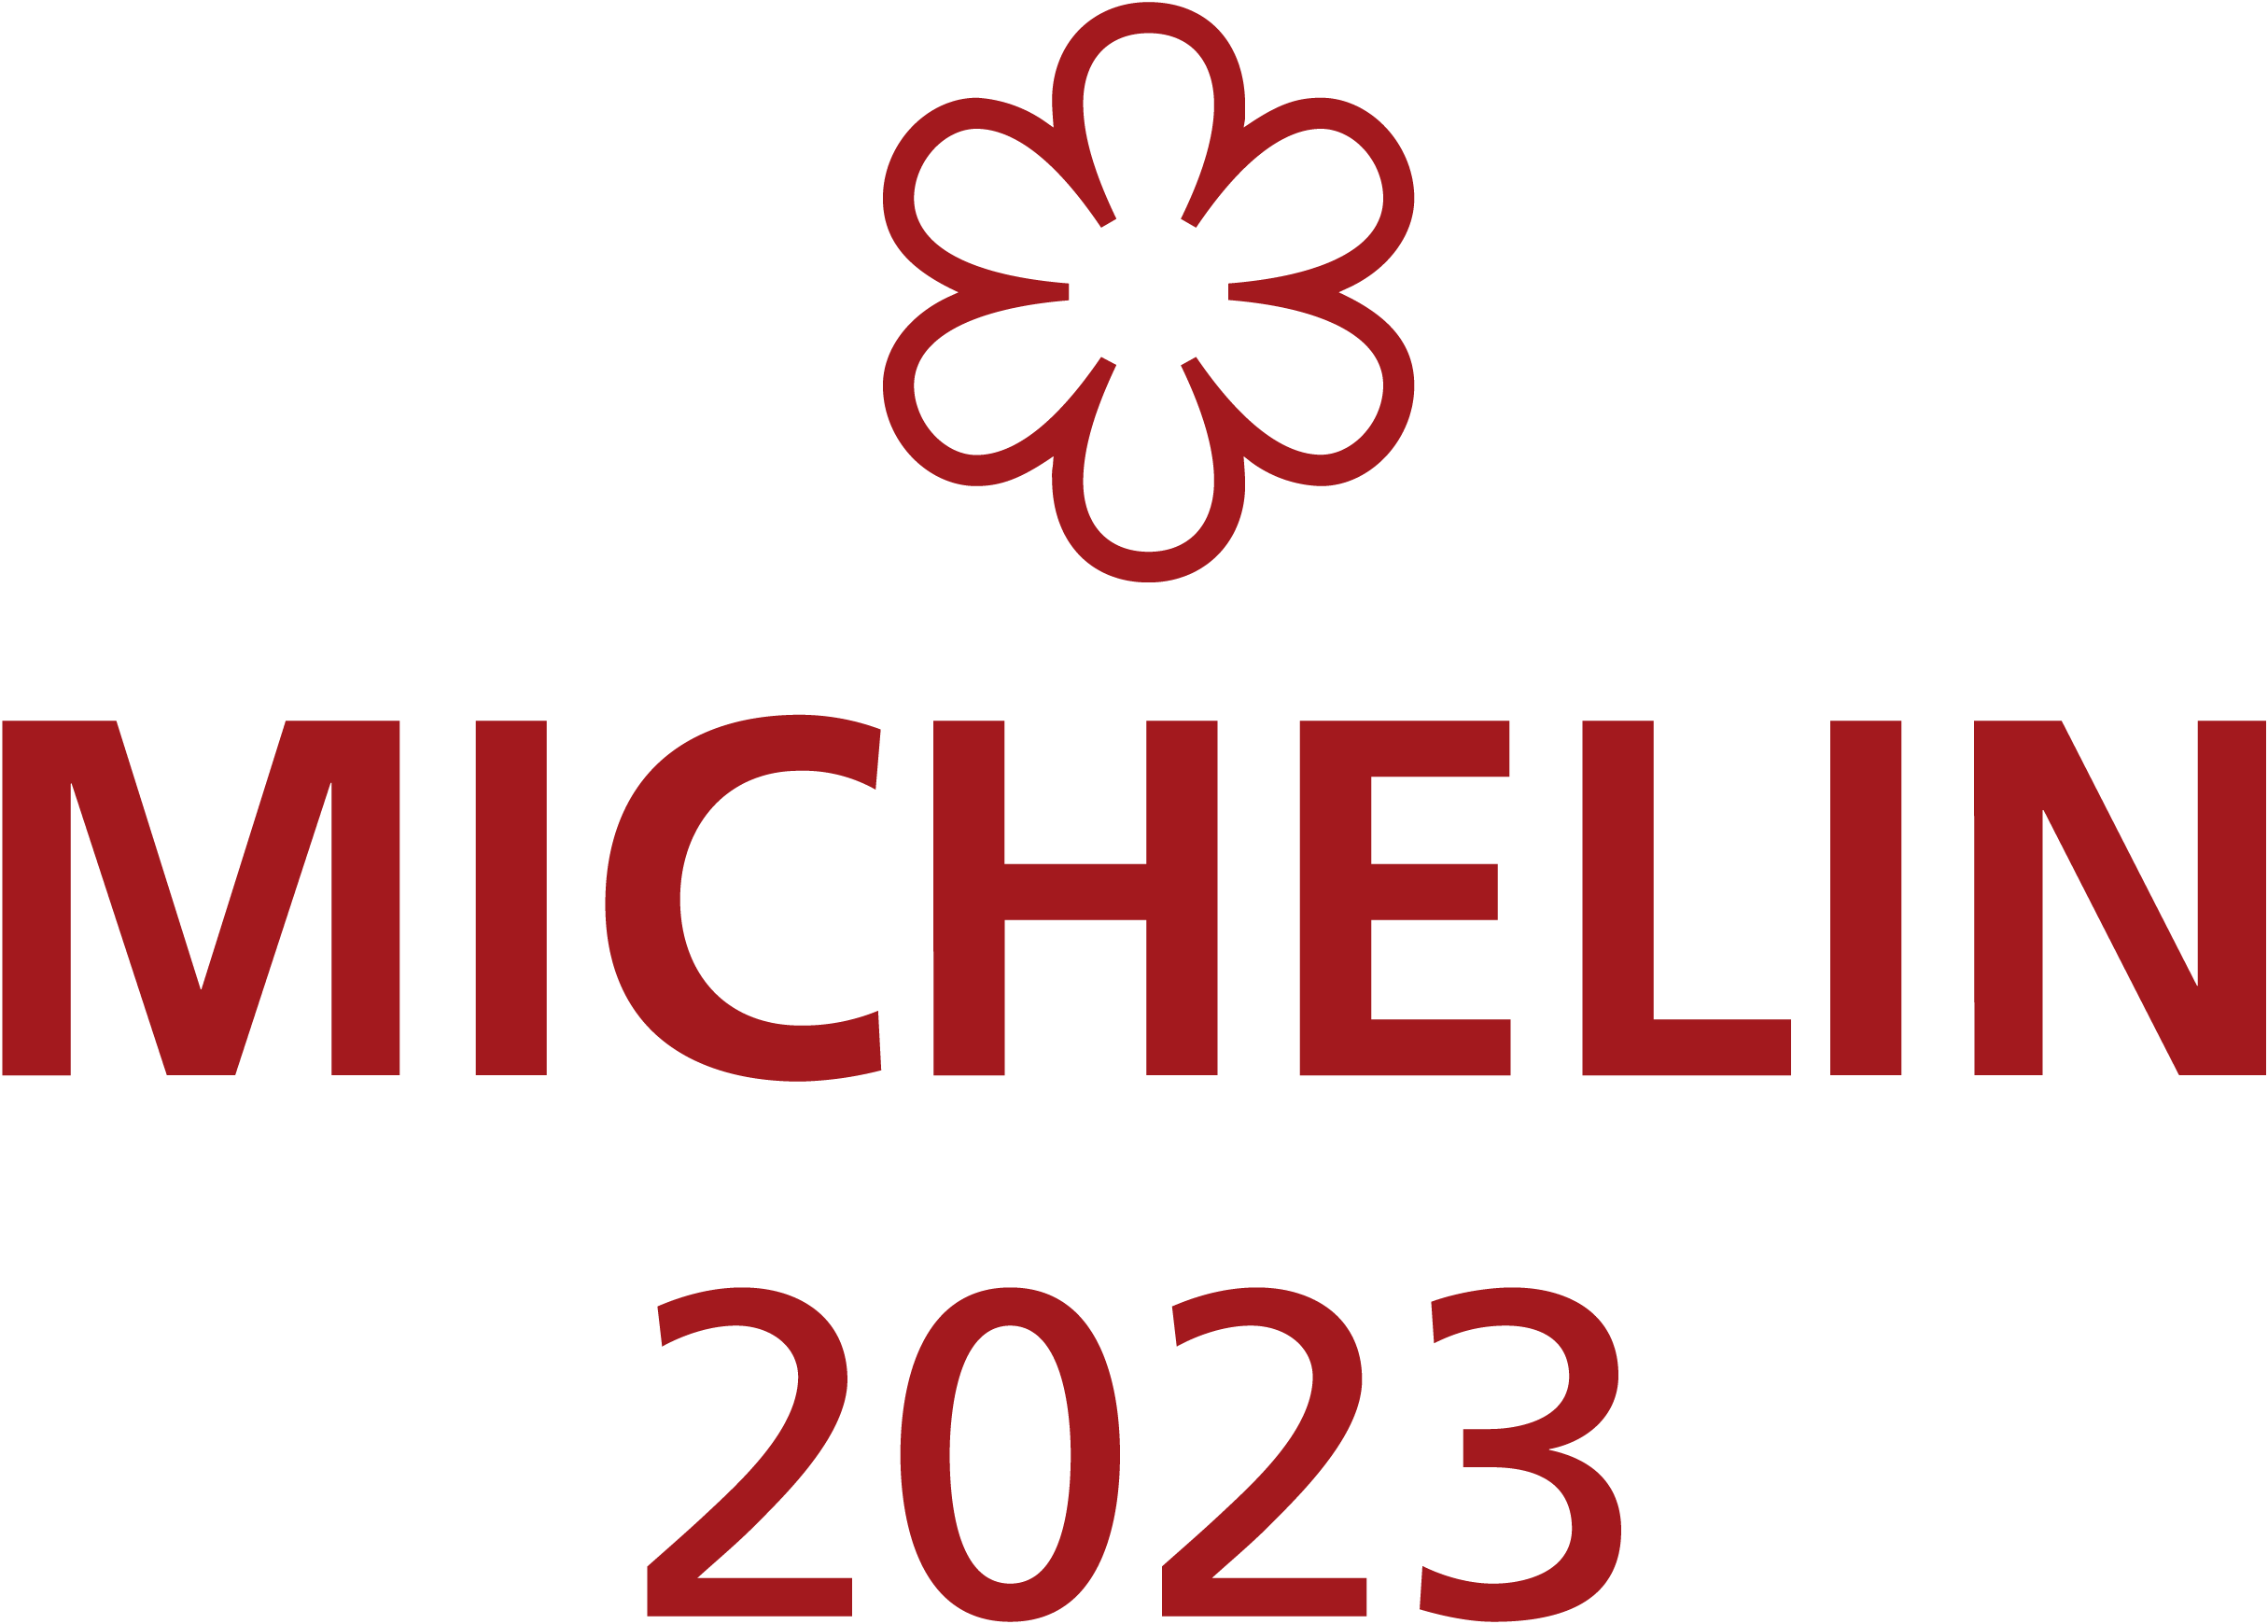 1 Star Michelin 2023